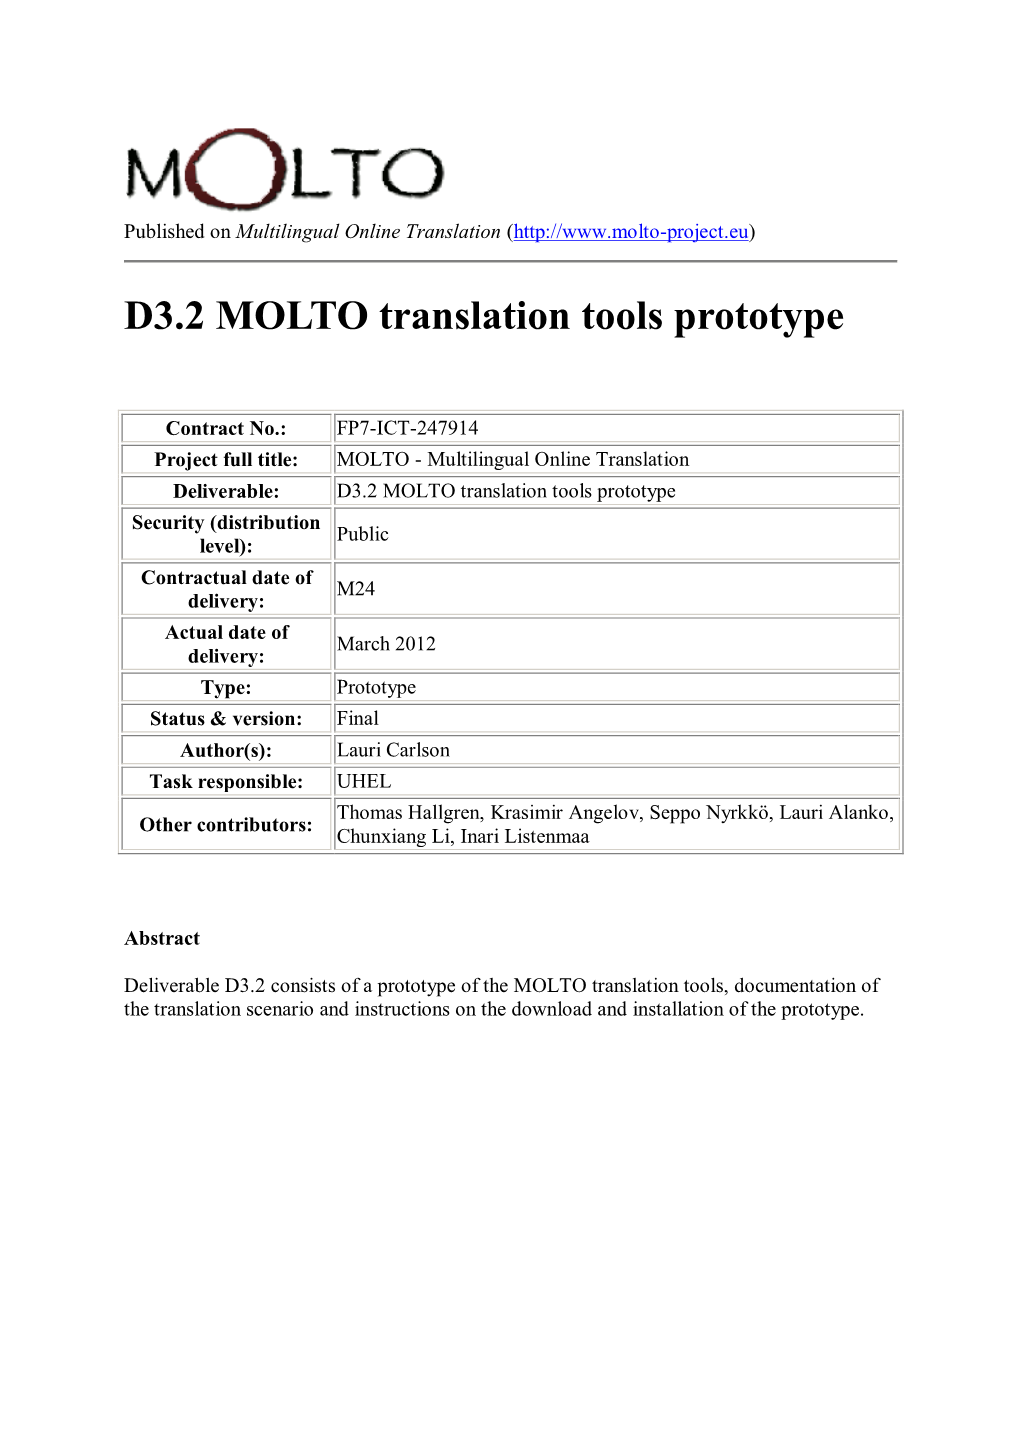 D3.2 MOLTO Translation Tools Prototype